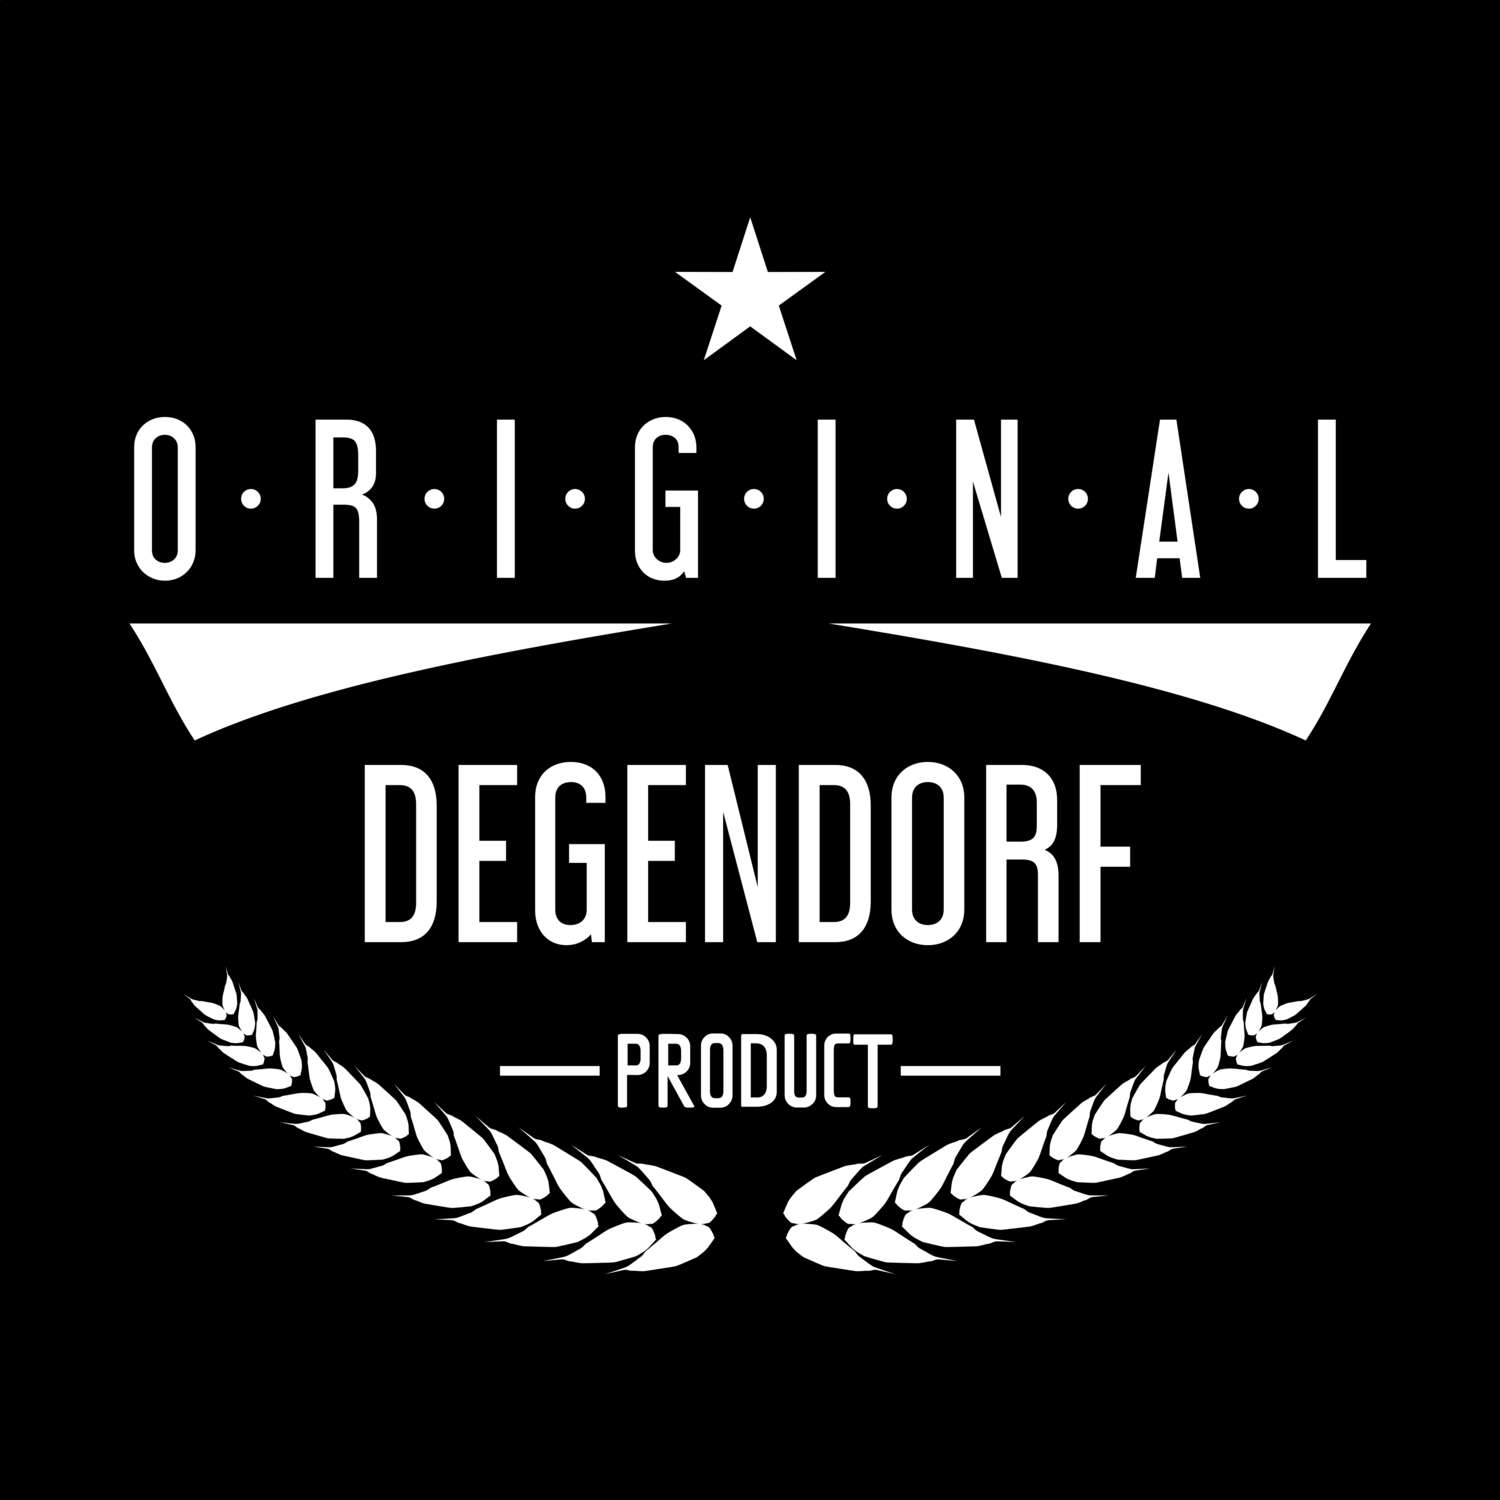 Degendorf T-Shirt »Original Product«